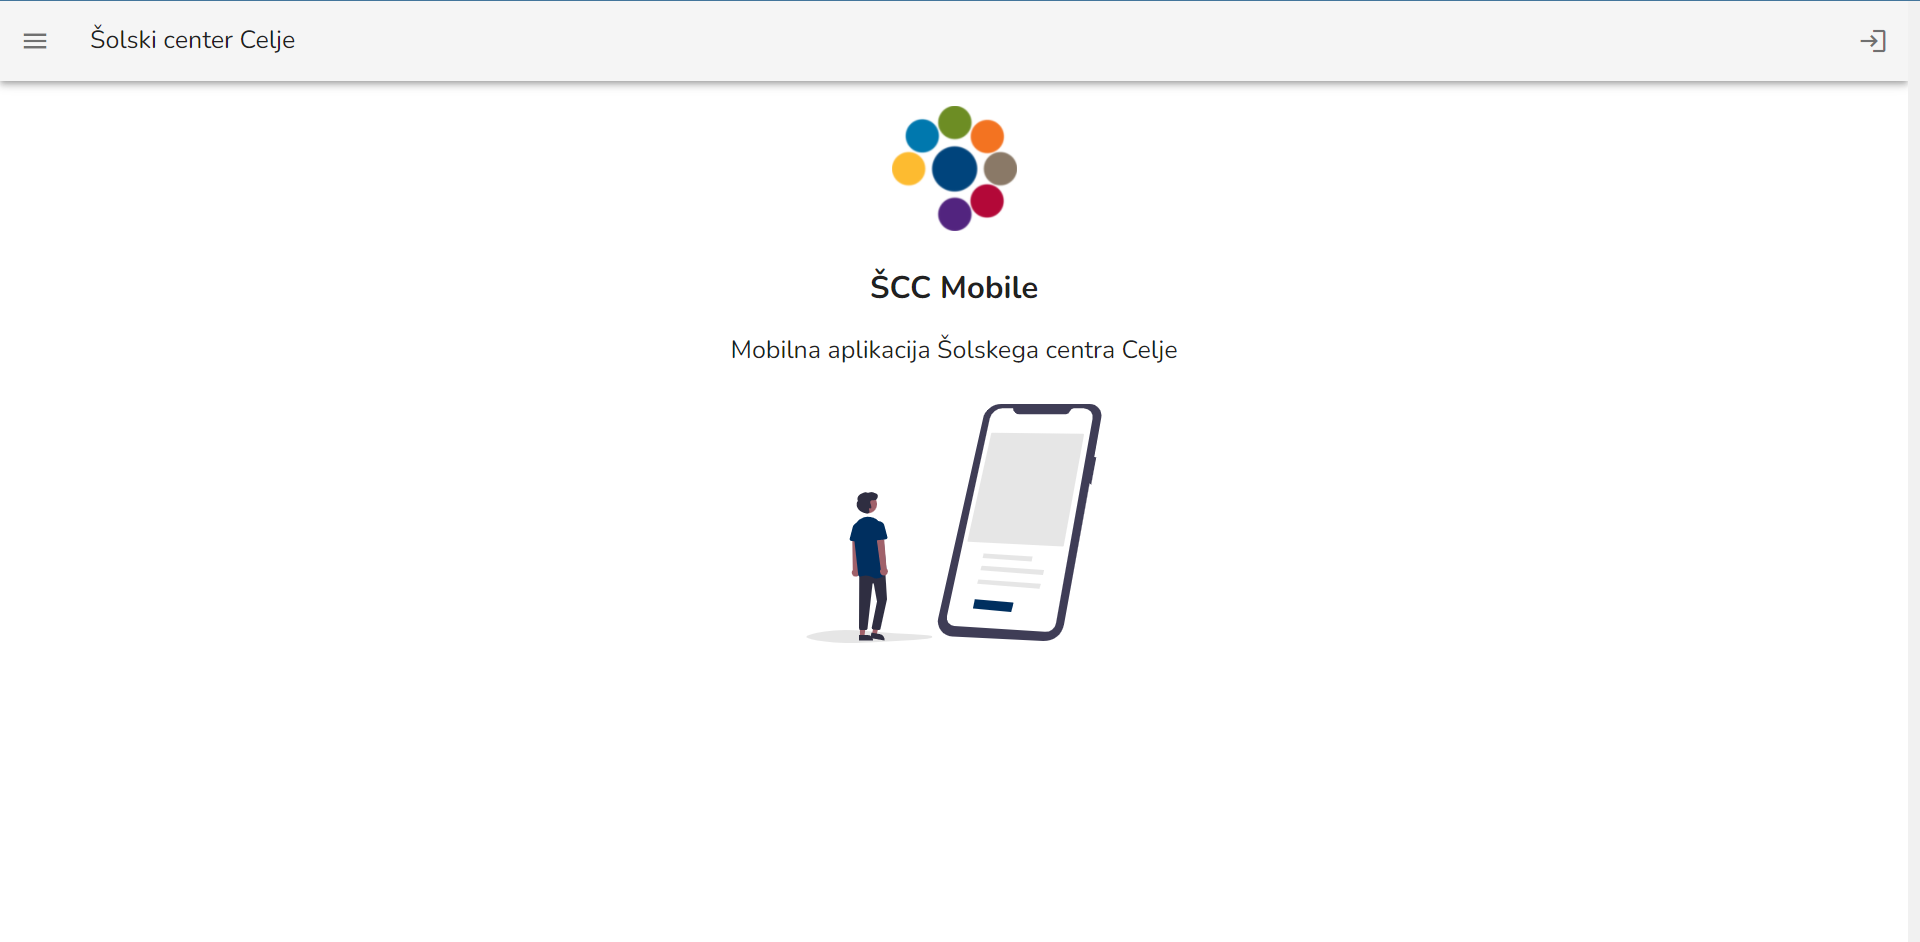 ŠCC Mobile